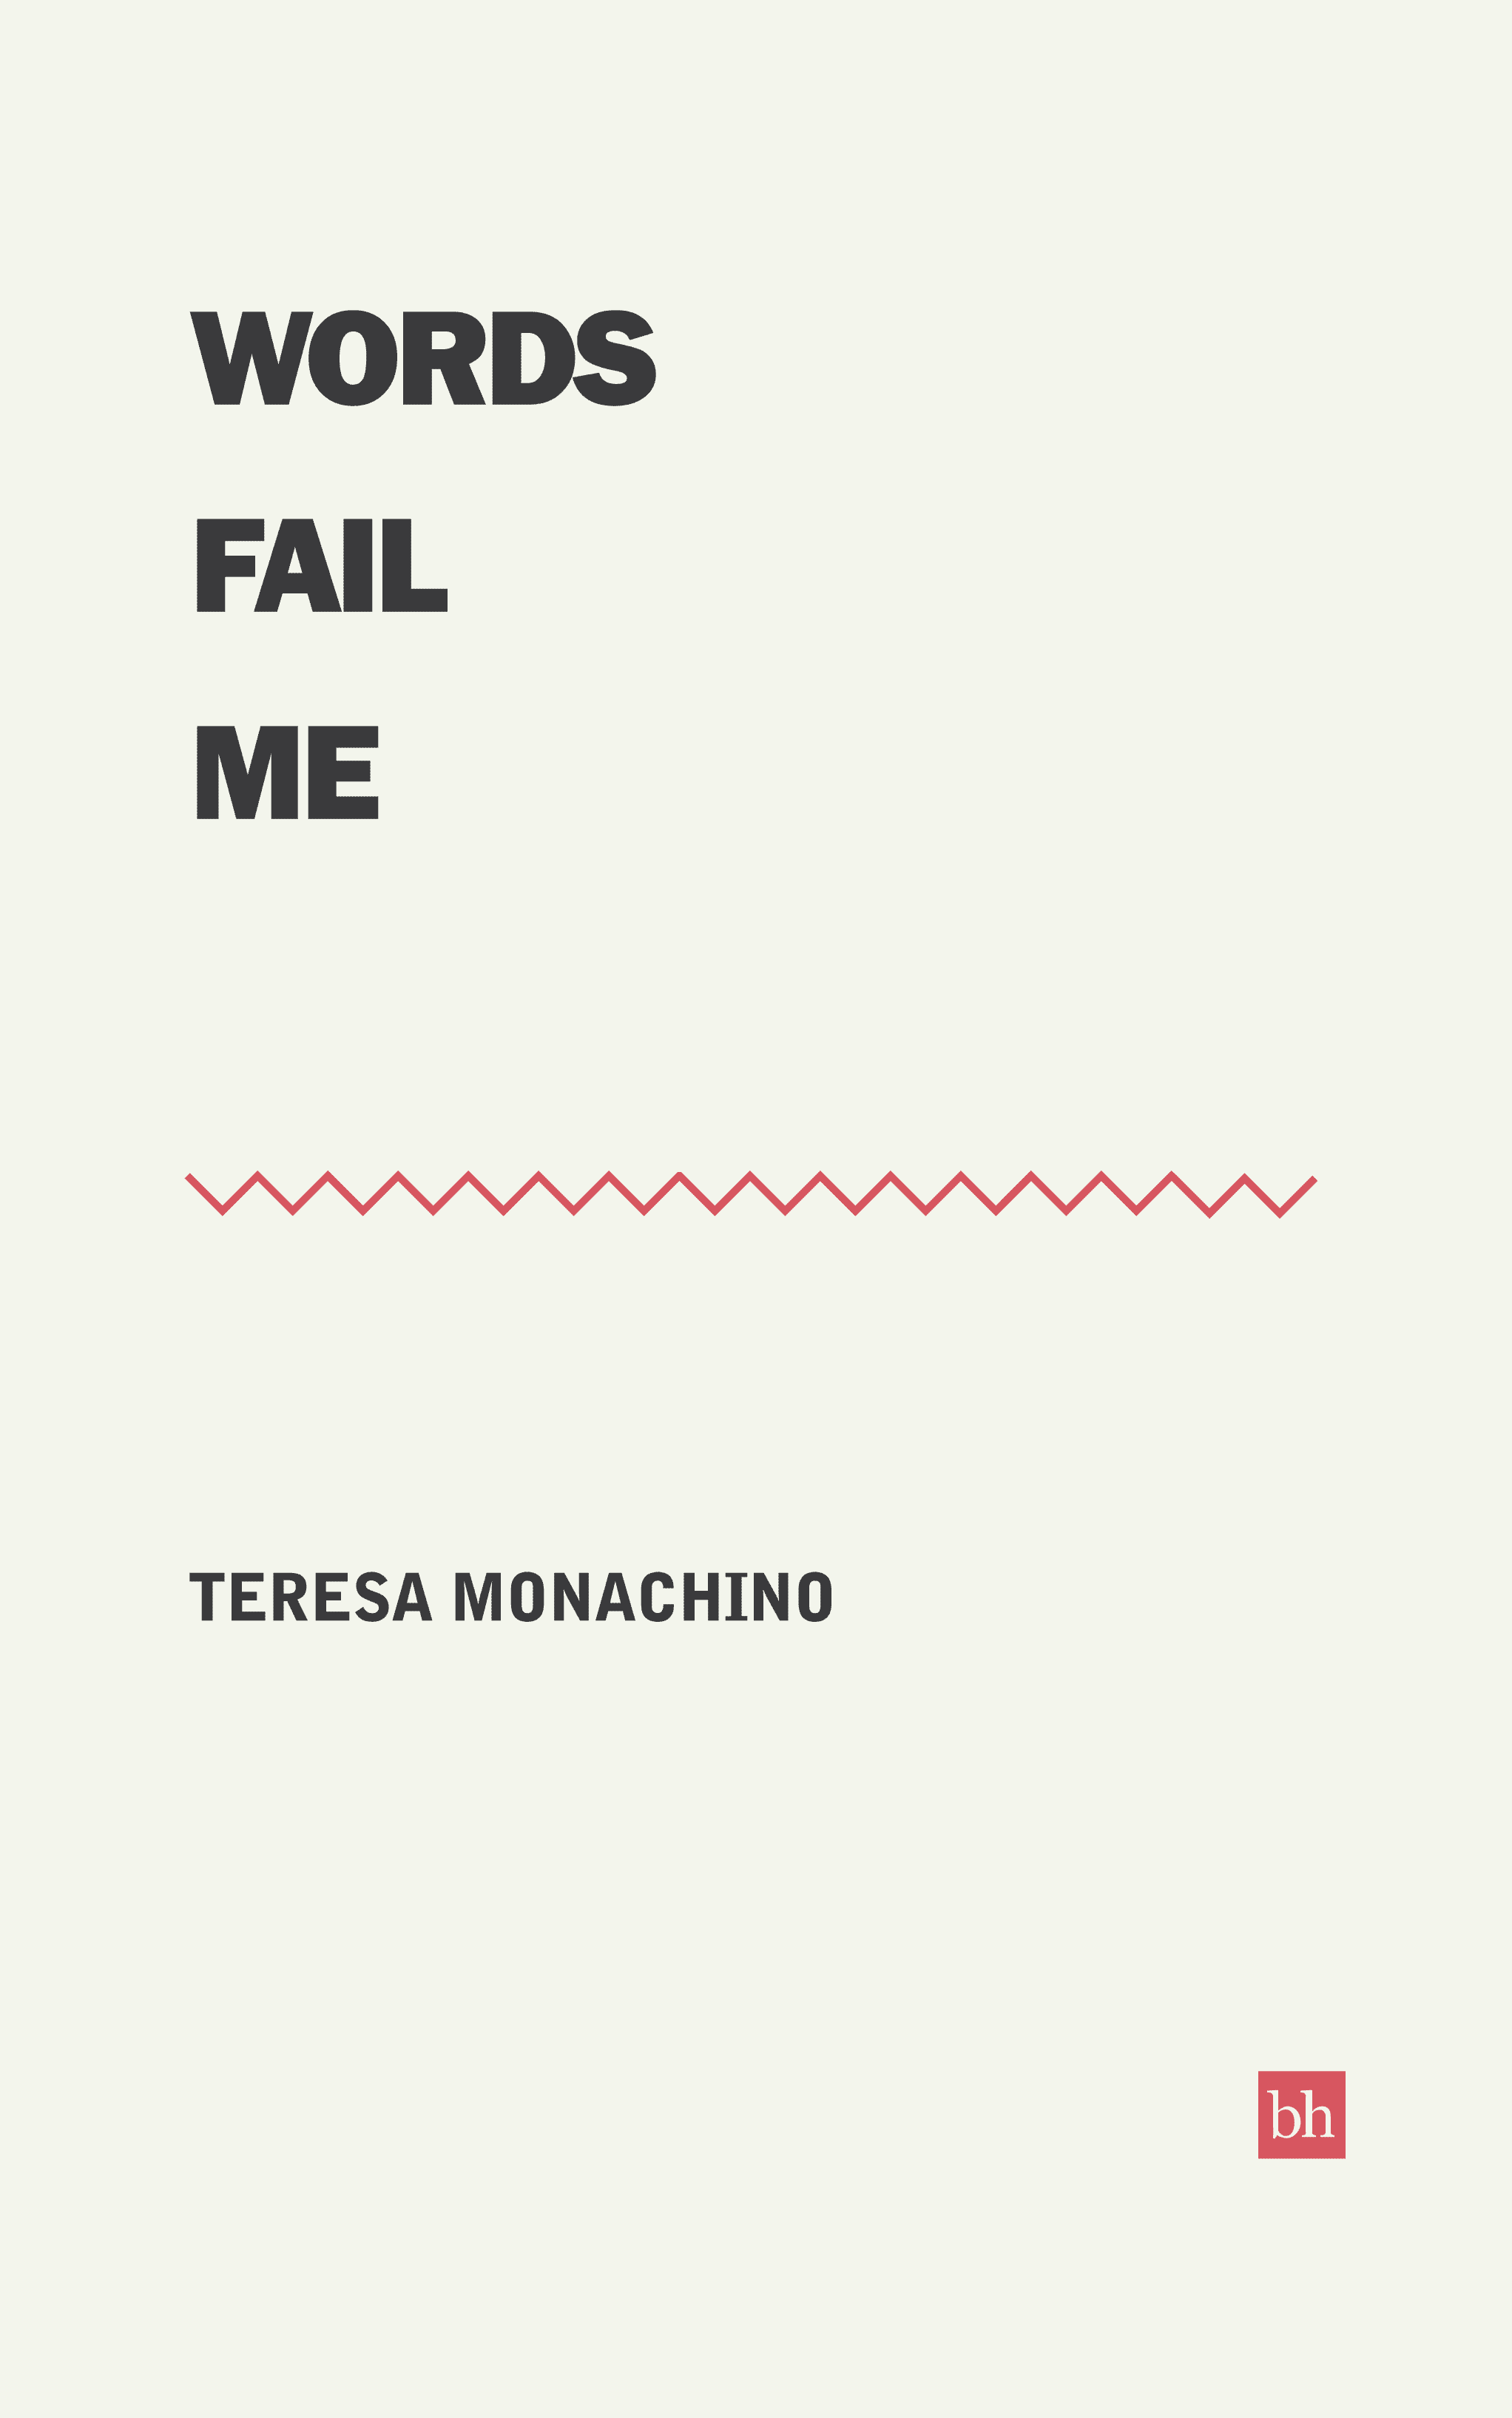 Words Fail Me by Teresa Monachino